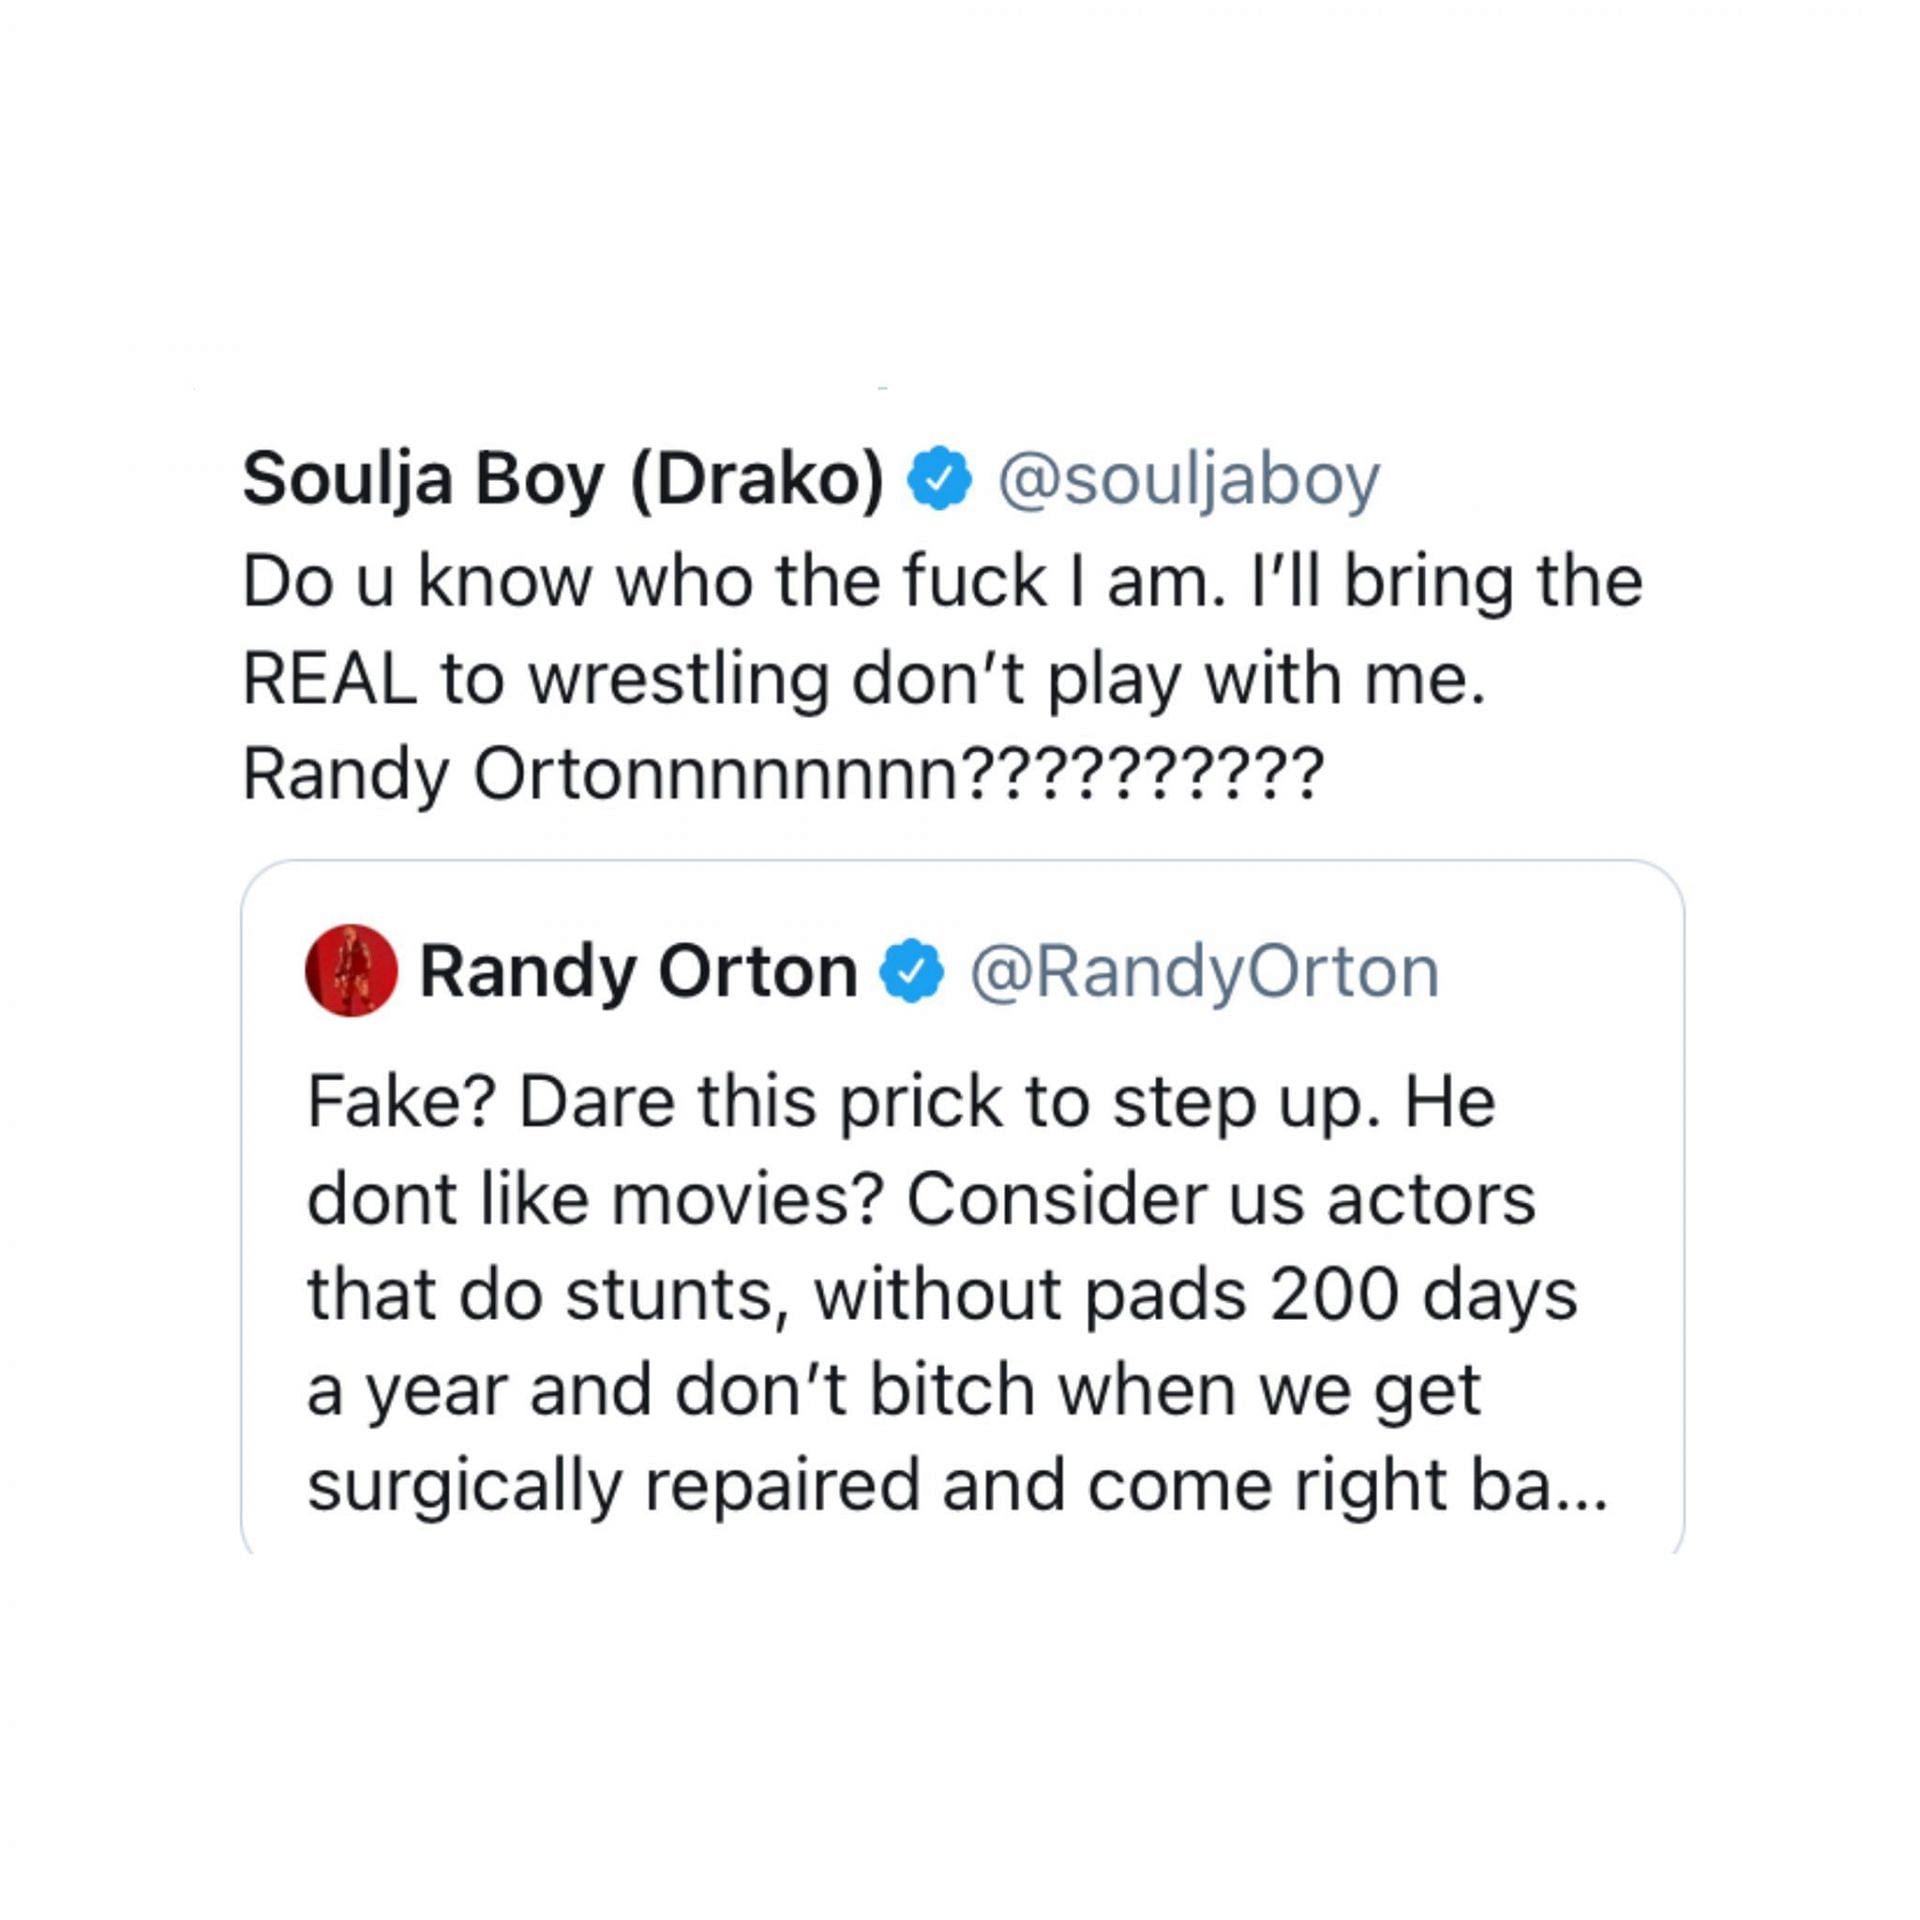 Randy Orton-Soulja Boy Tweet Exchange